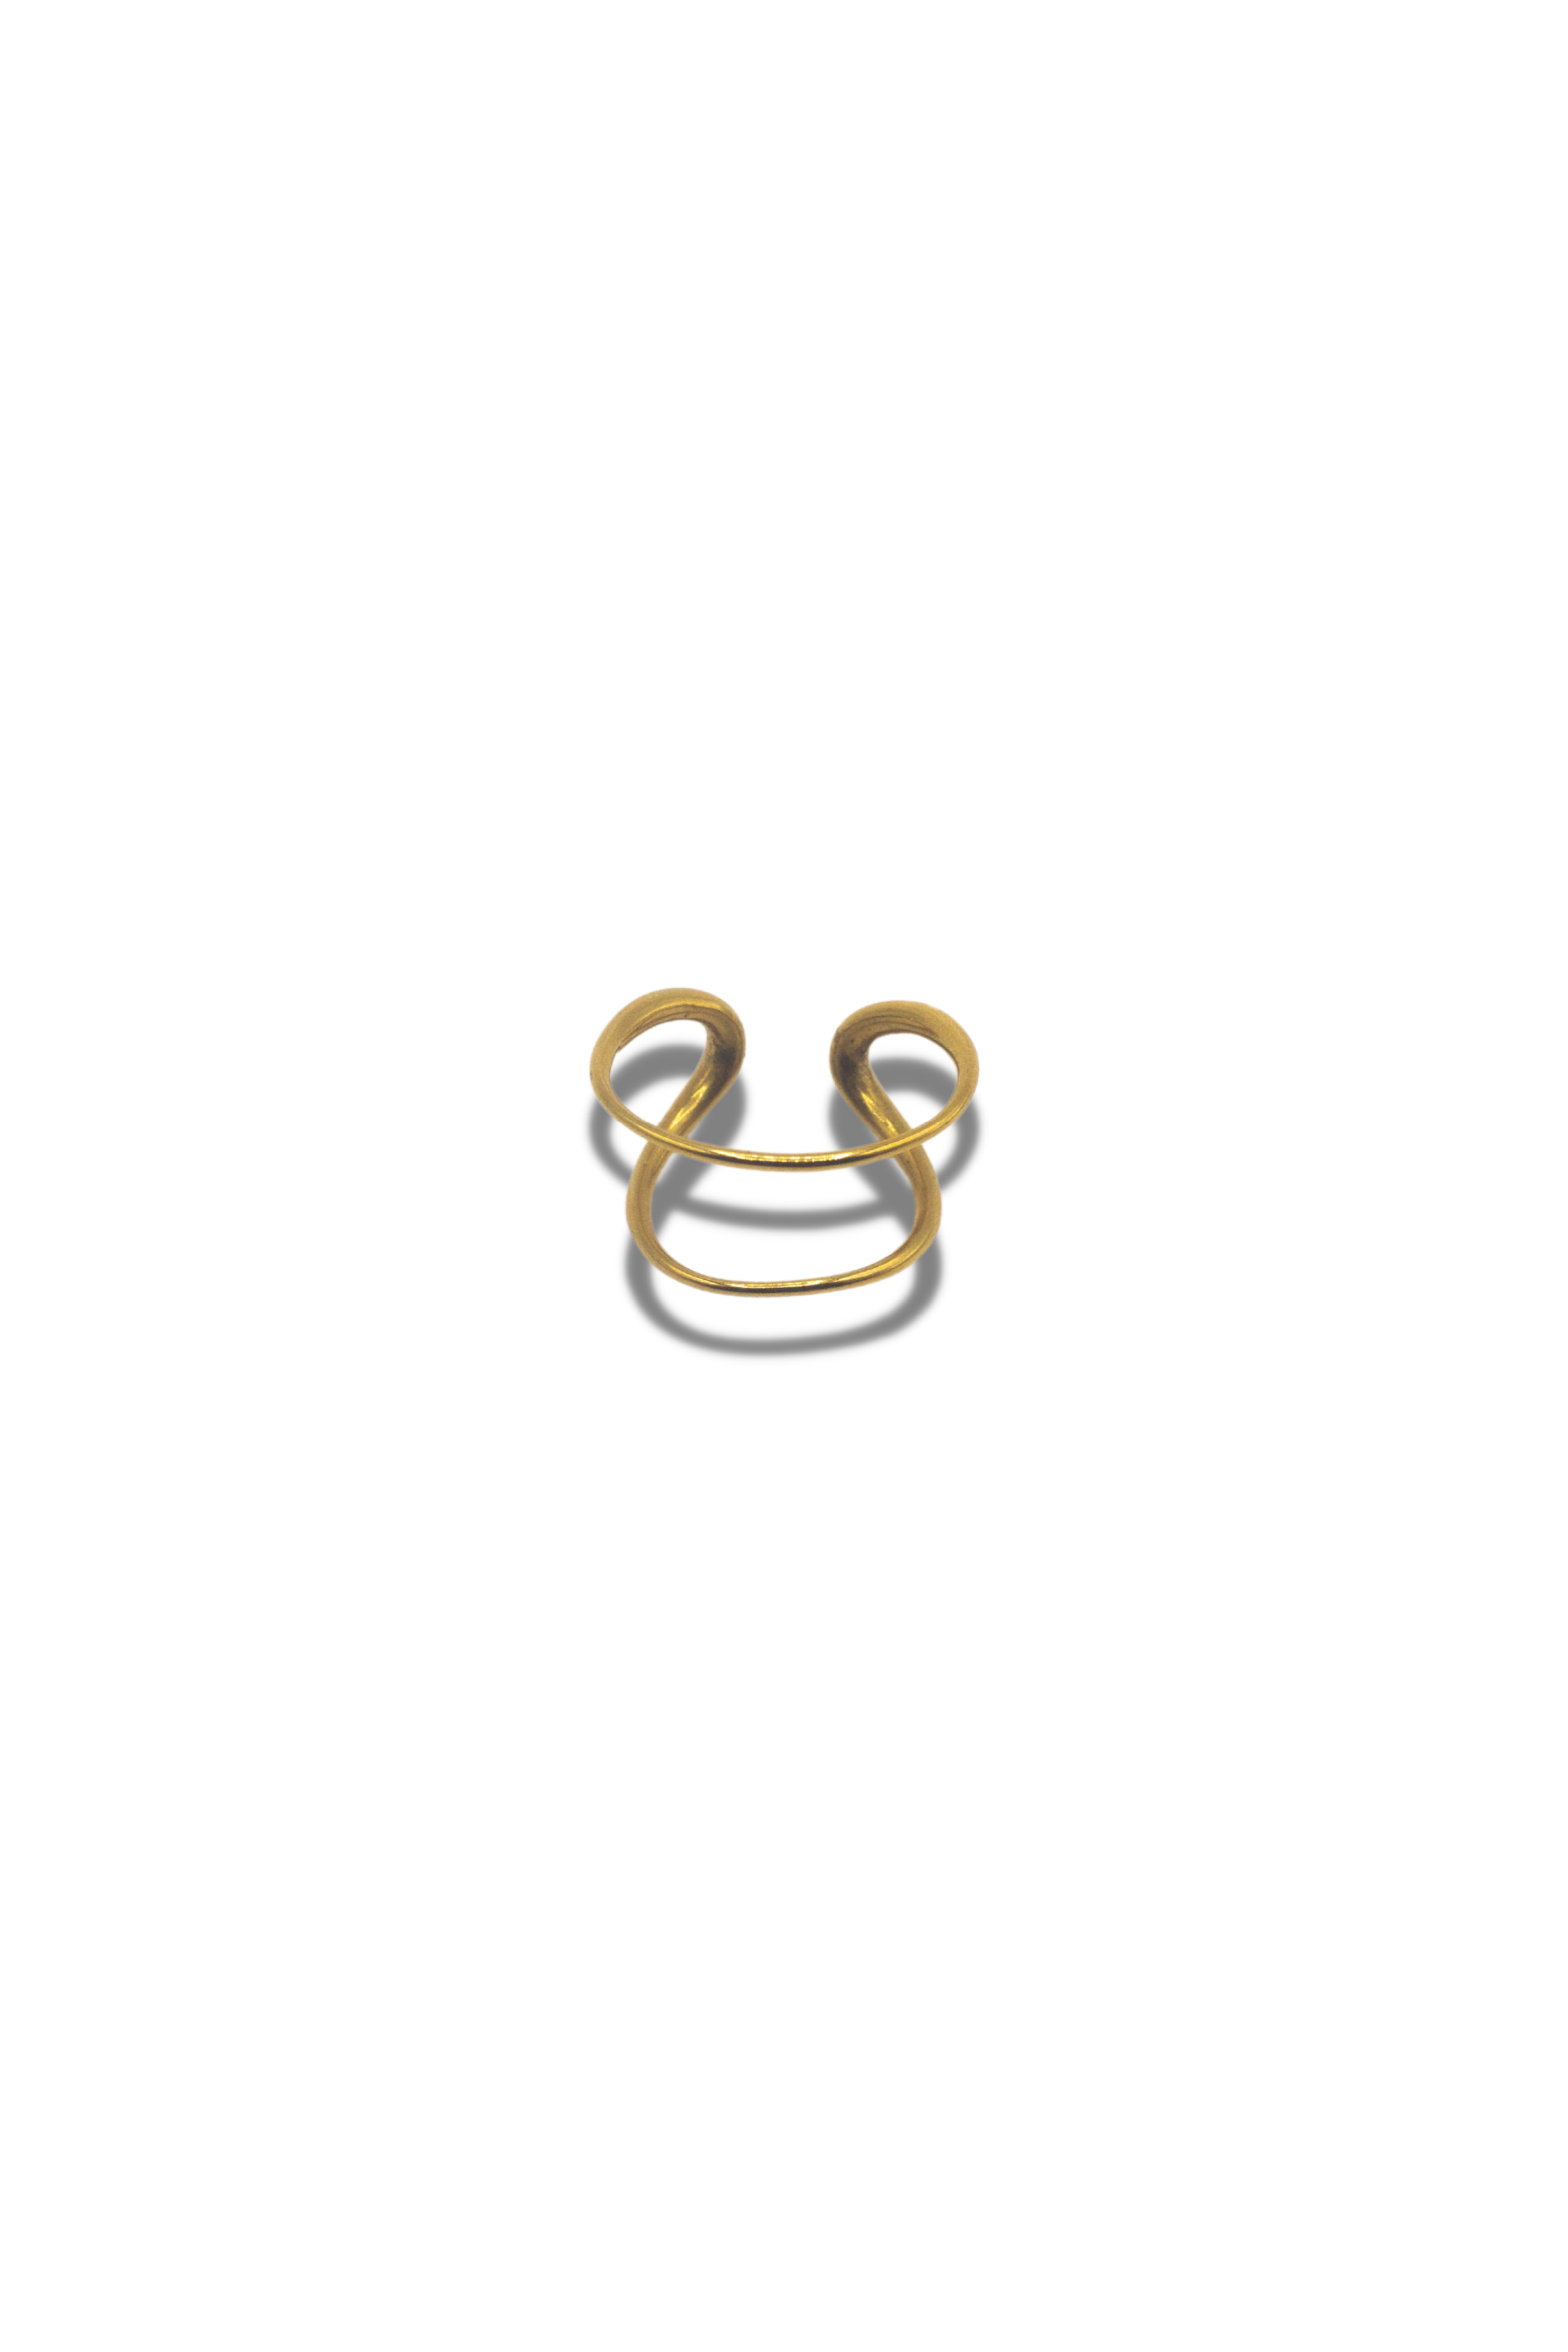 18k gold spiral ear cuff. Unisex Spiral Ear Cuffs by E's Element.